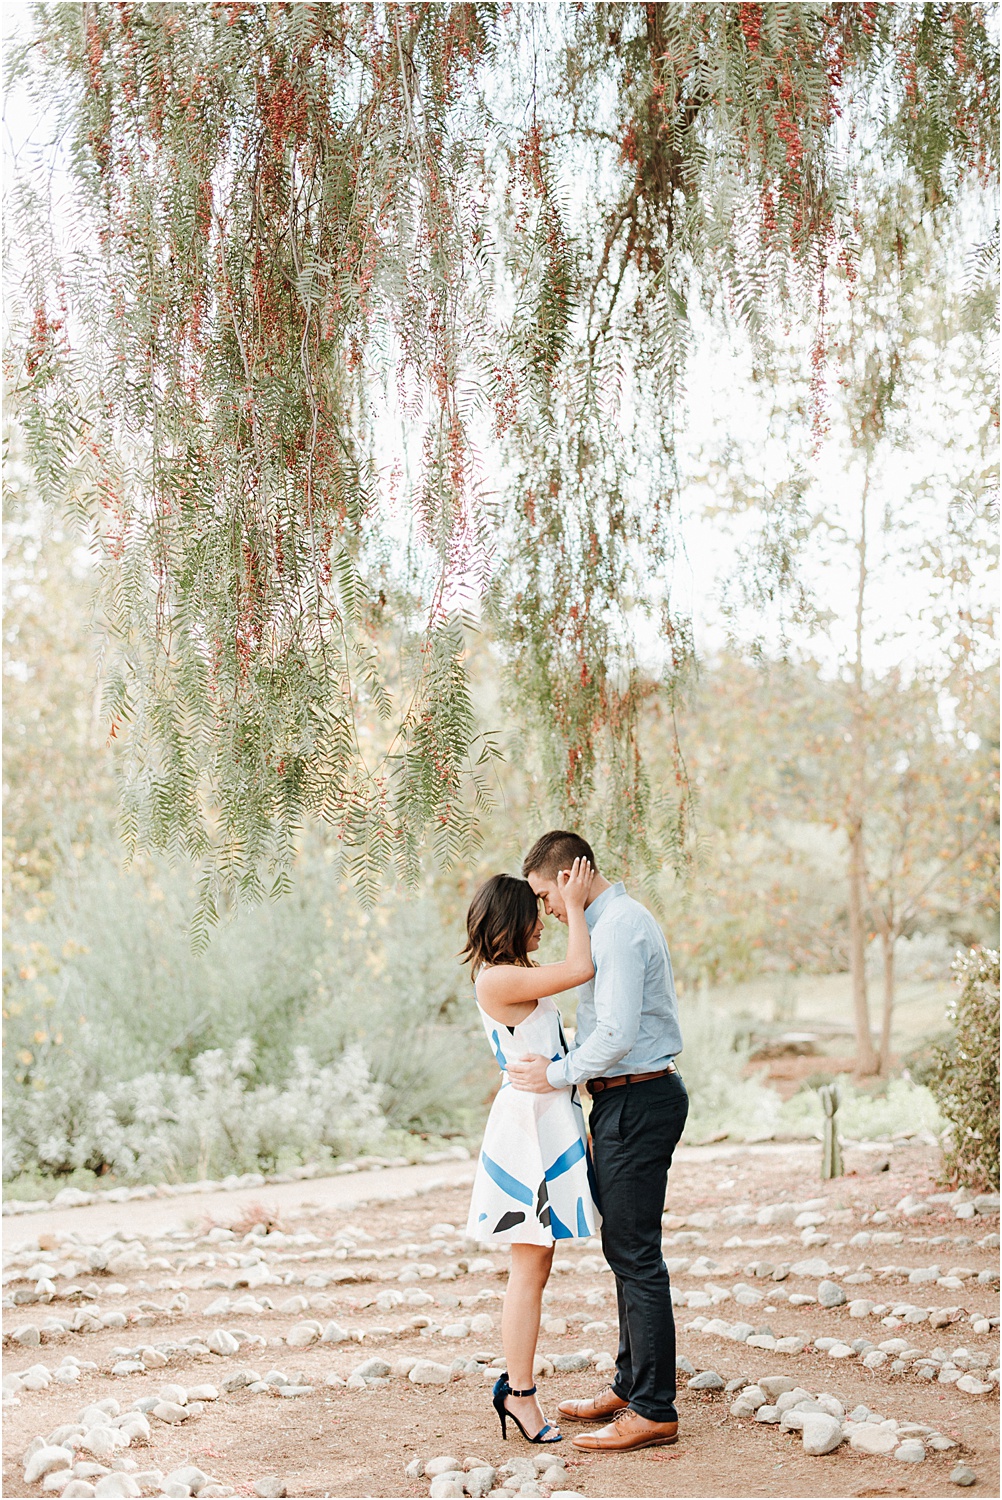 Bianca+Grant - Arlington Gardens - Pasadena - Engagement_0009.jpg